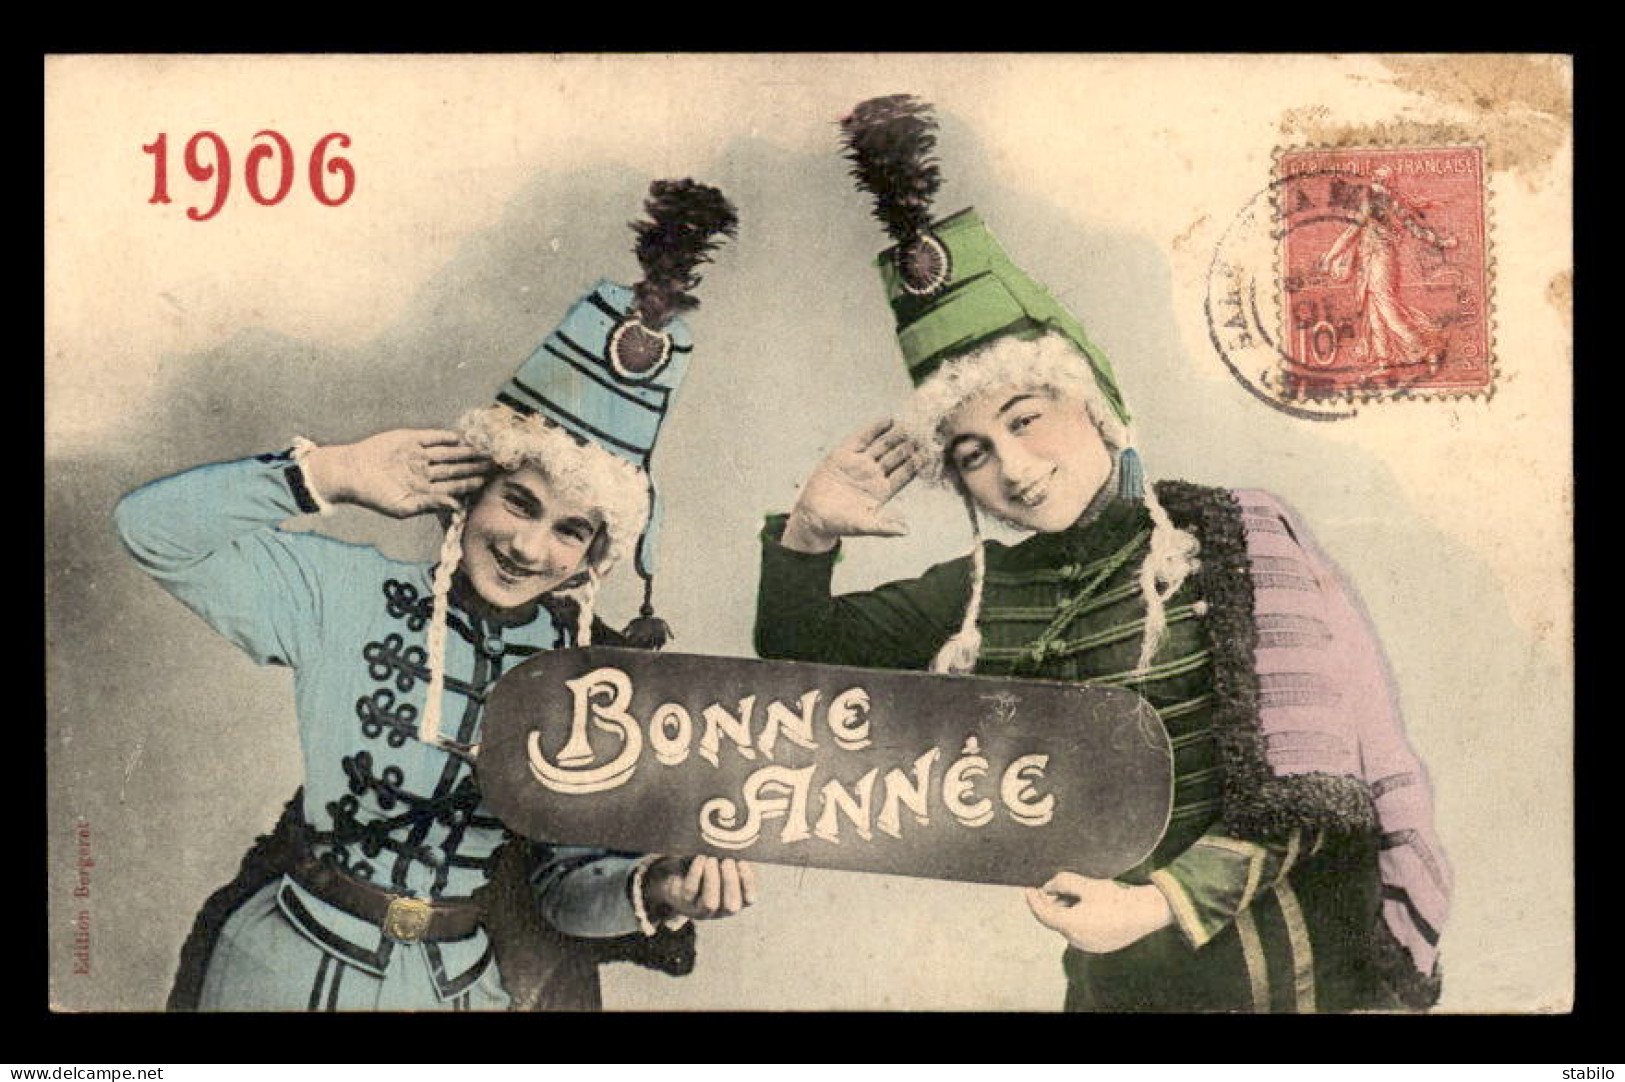 BERGERET - BONNE ANNEE 1906 - CARTE COLORISEE - Bergeret